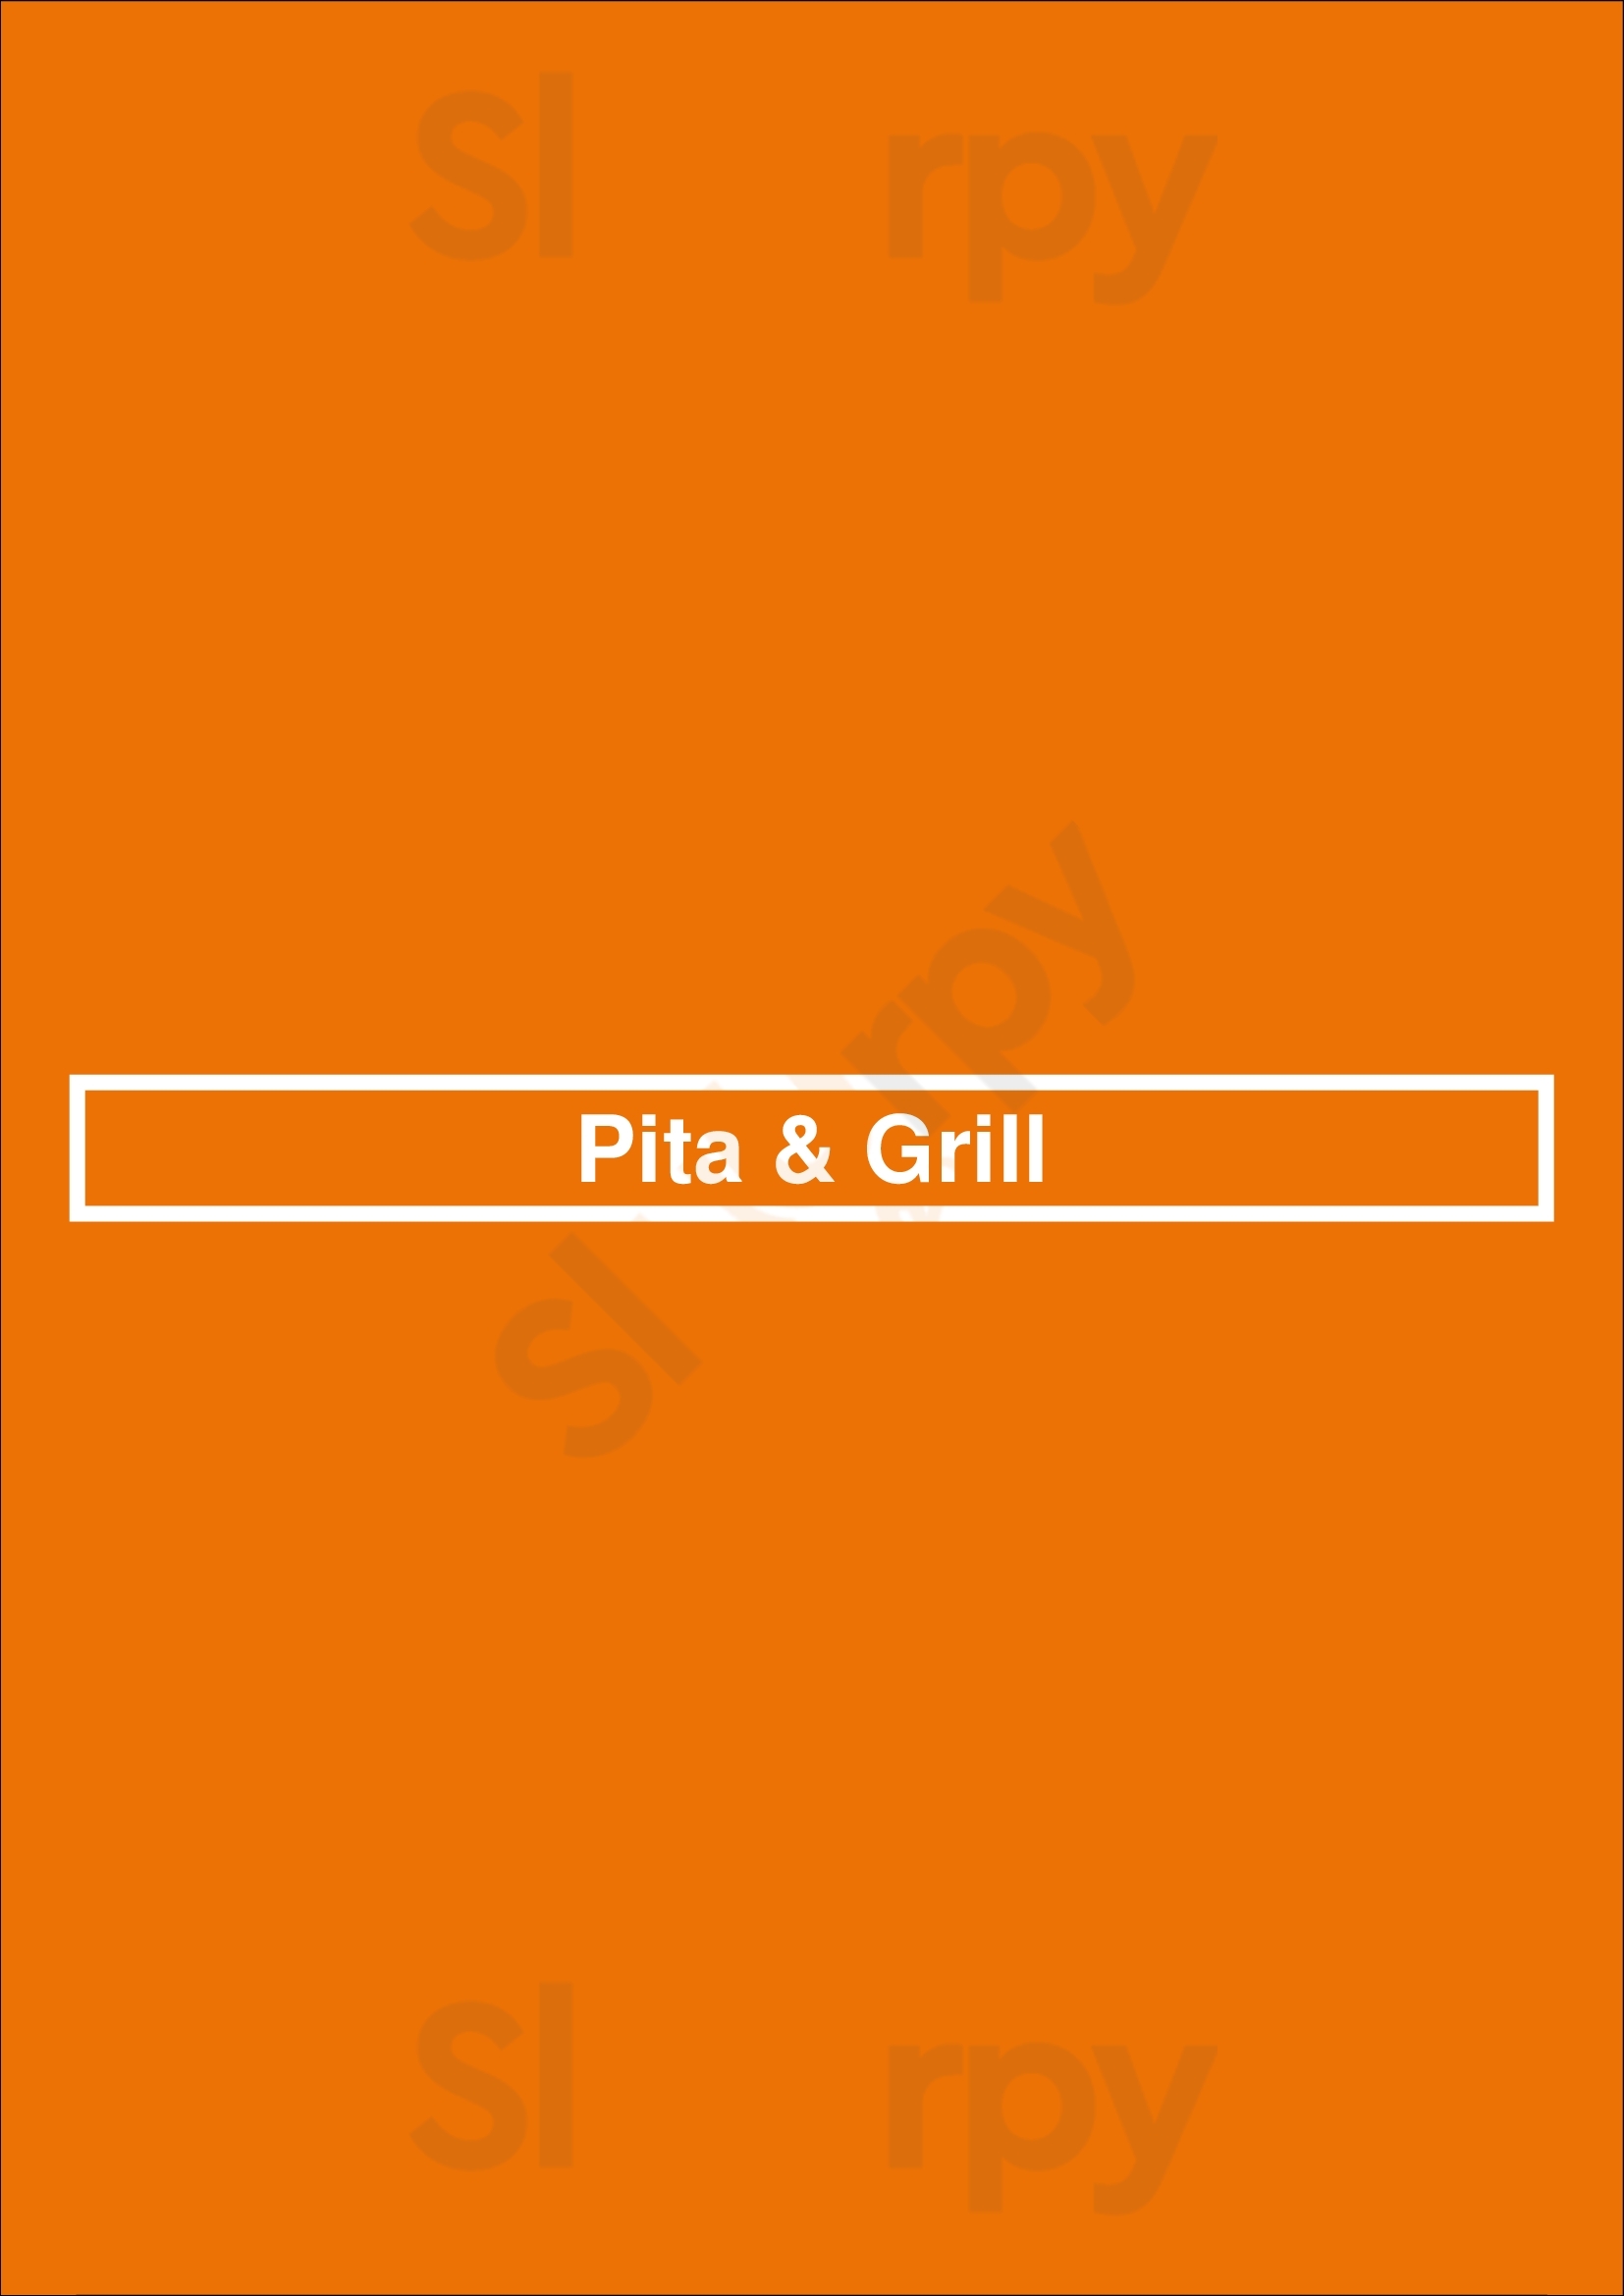 Pita & Grill Mississauga Menu - 1